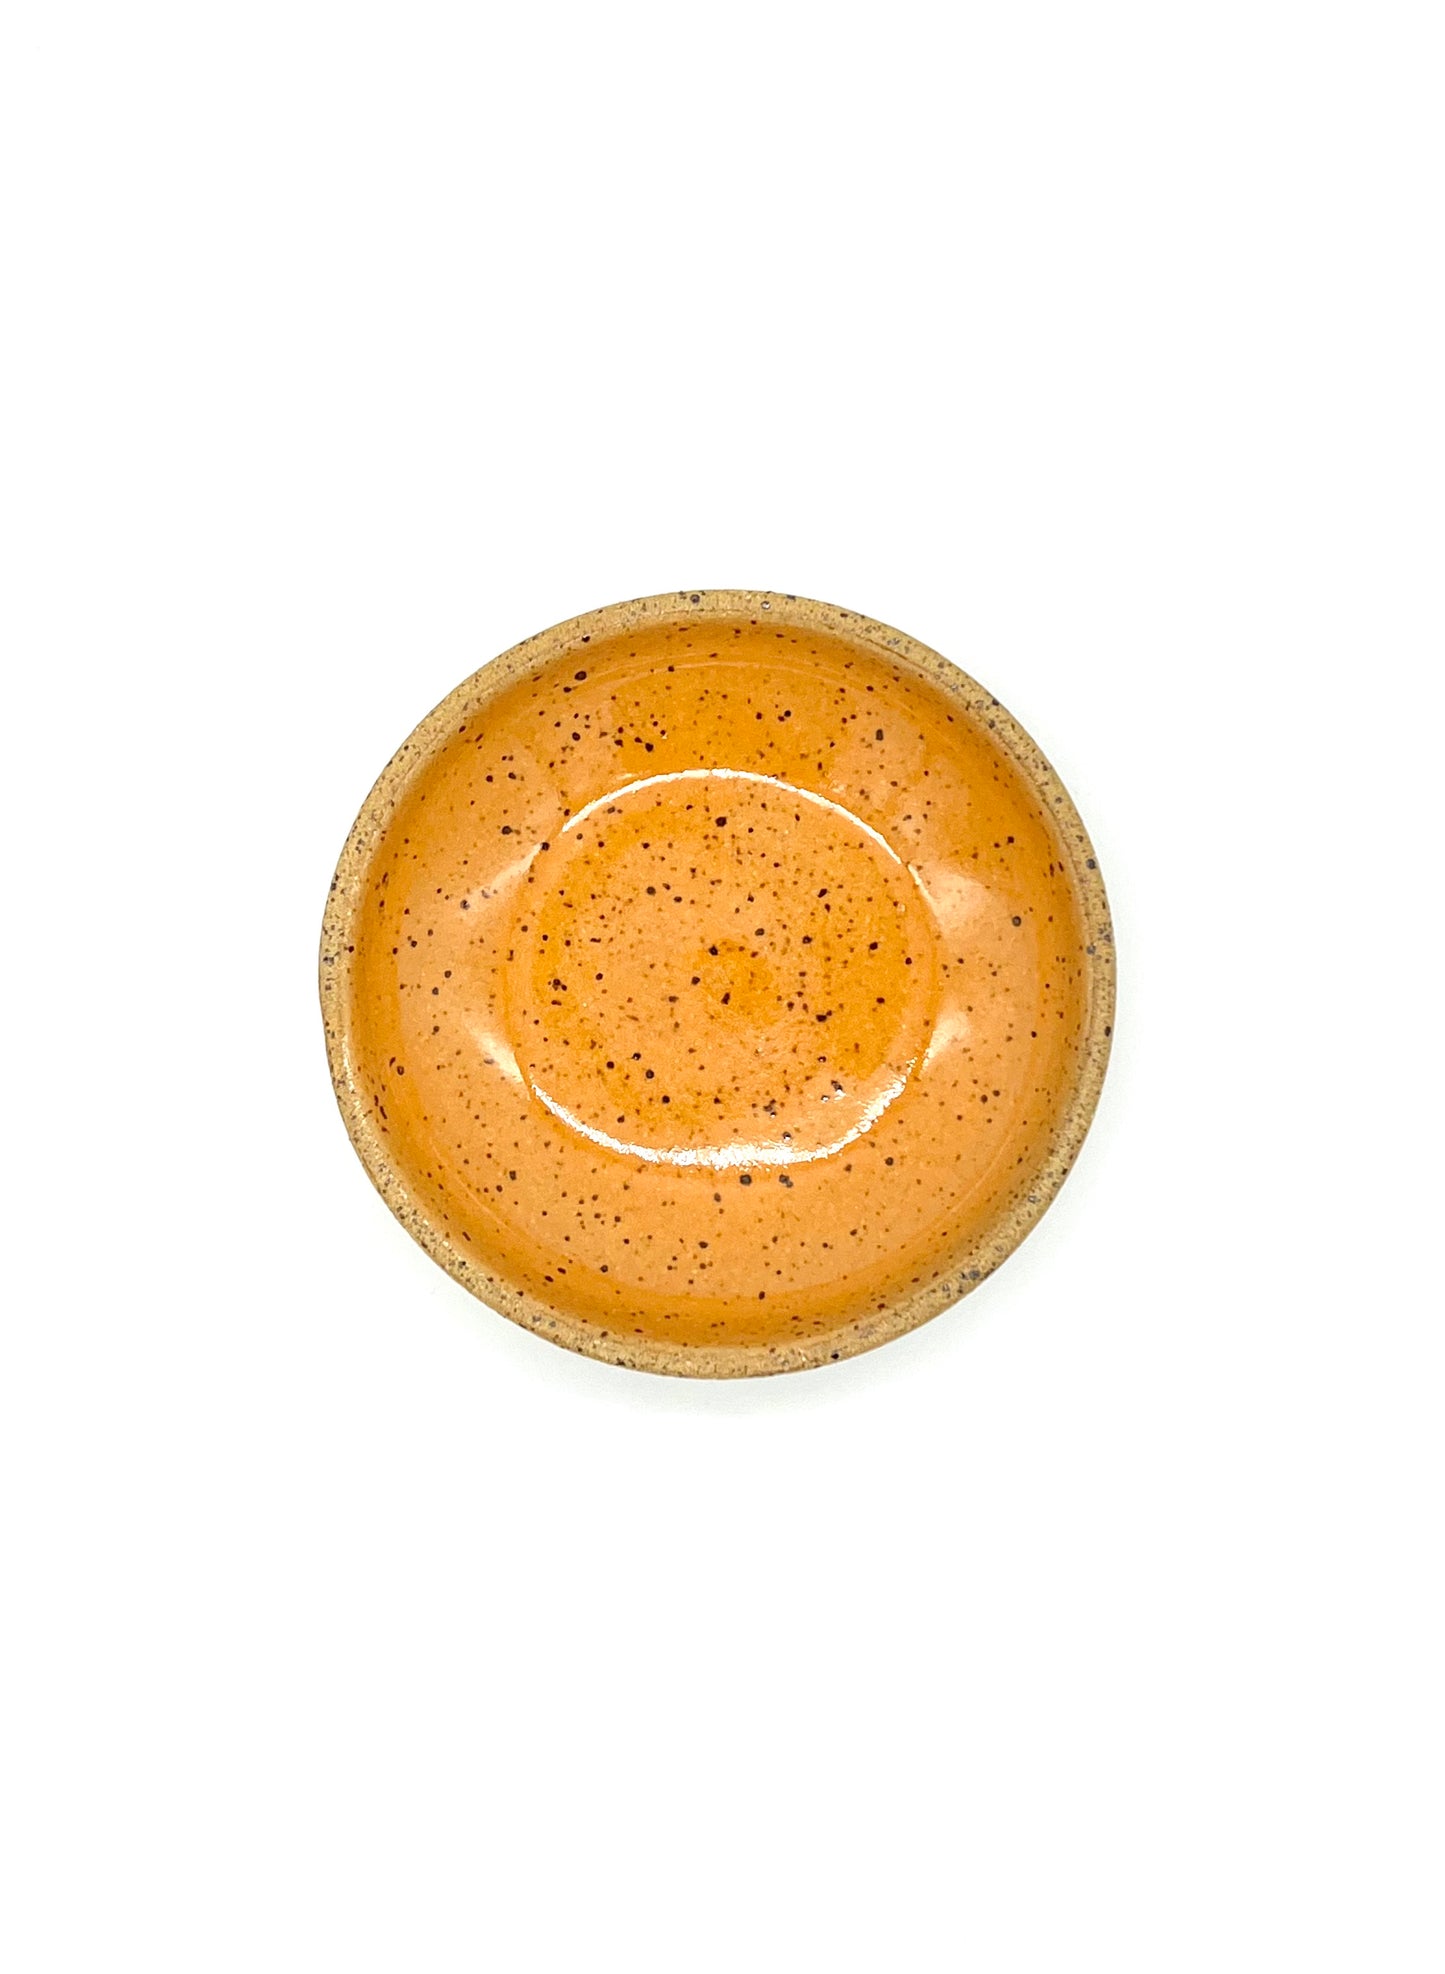 Spice/Tea Bag/Trinket Dish - Orange Speckle